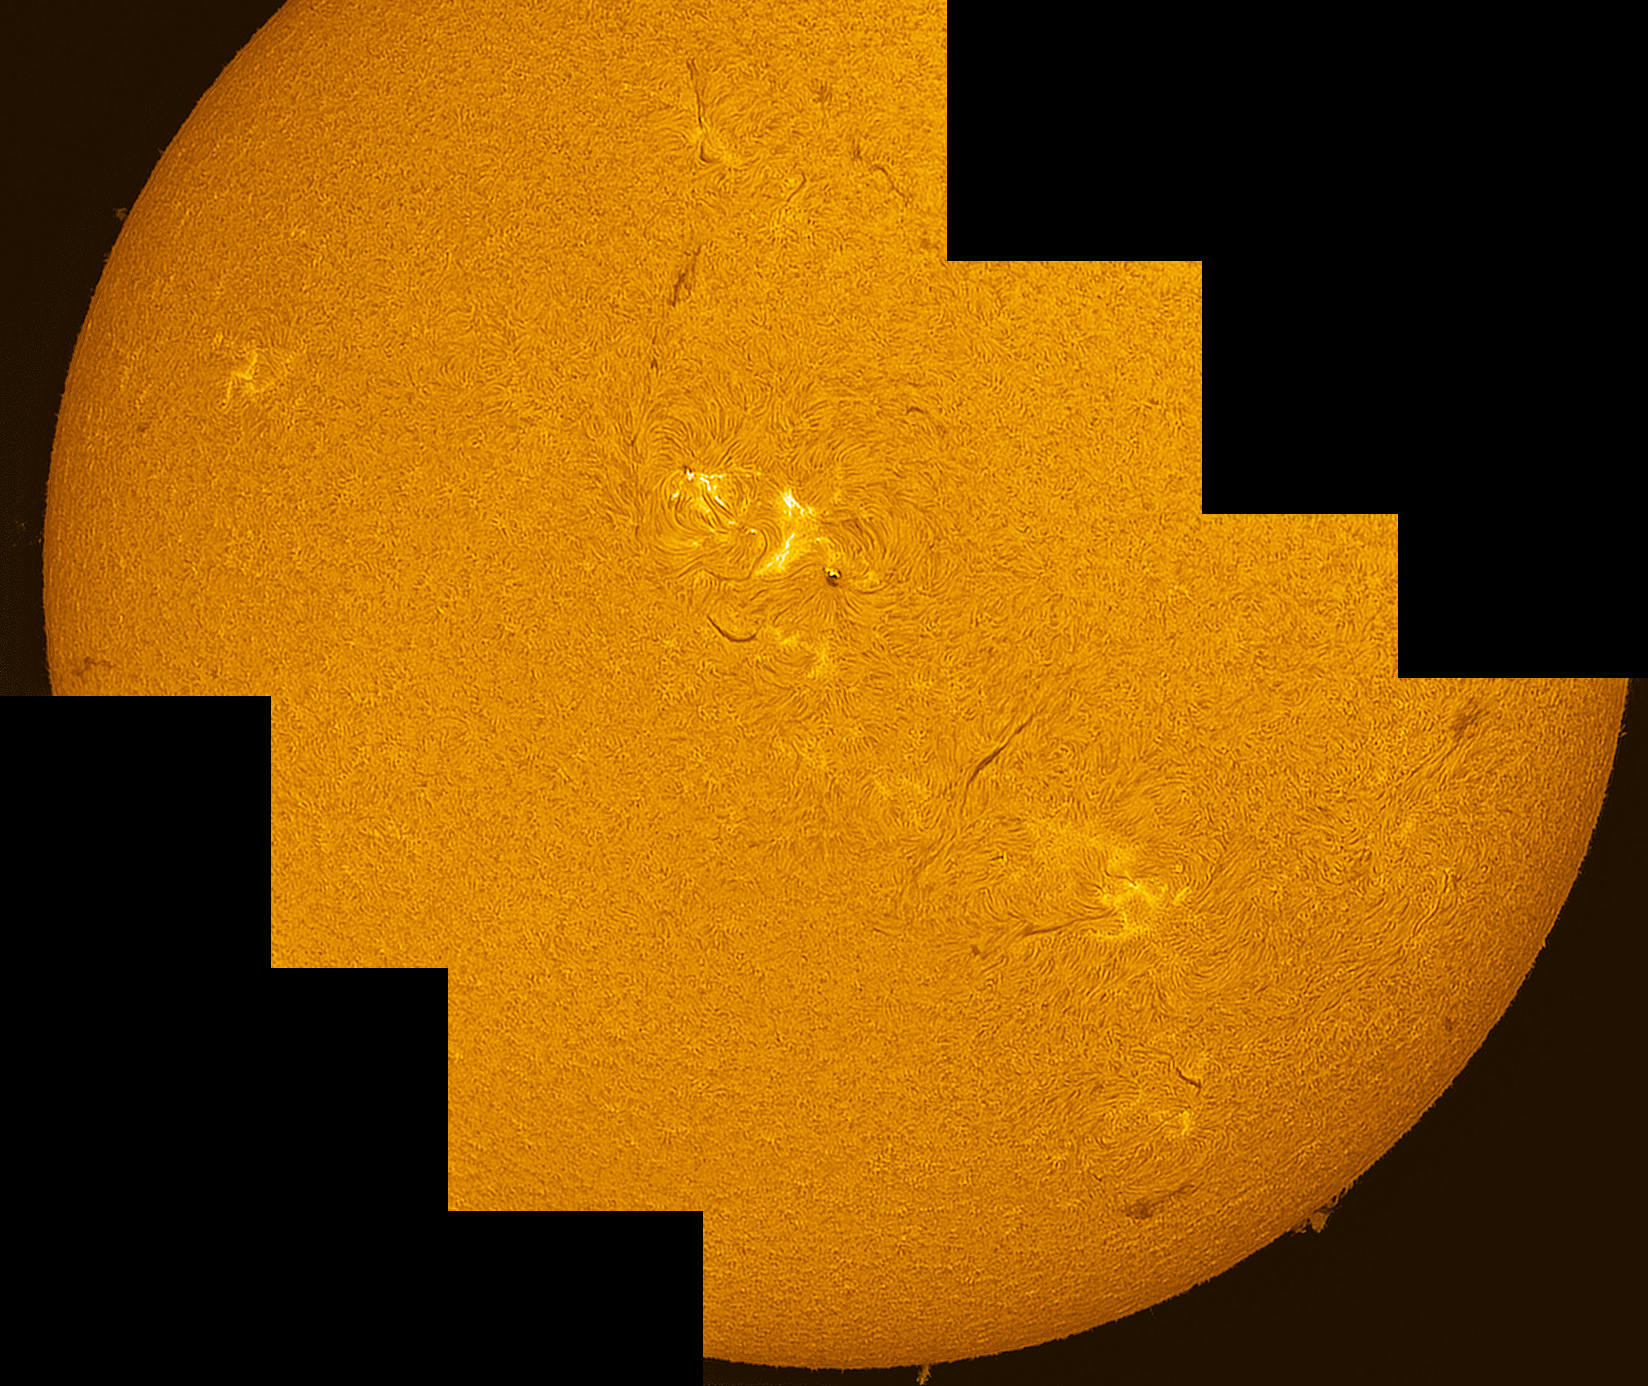 sun20160717-10h16UT-sm40DS-fs60-gpx1.25-BF10-bx2.5-dmk41-SP-r75.jpg